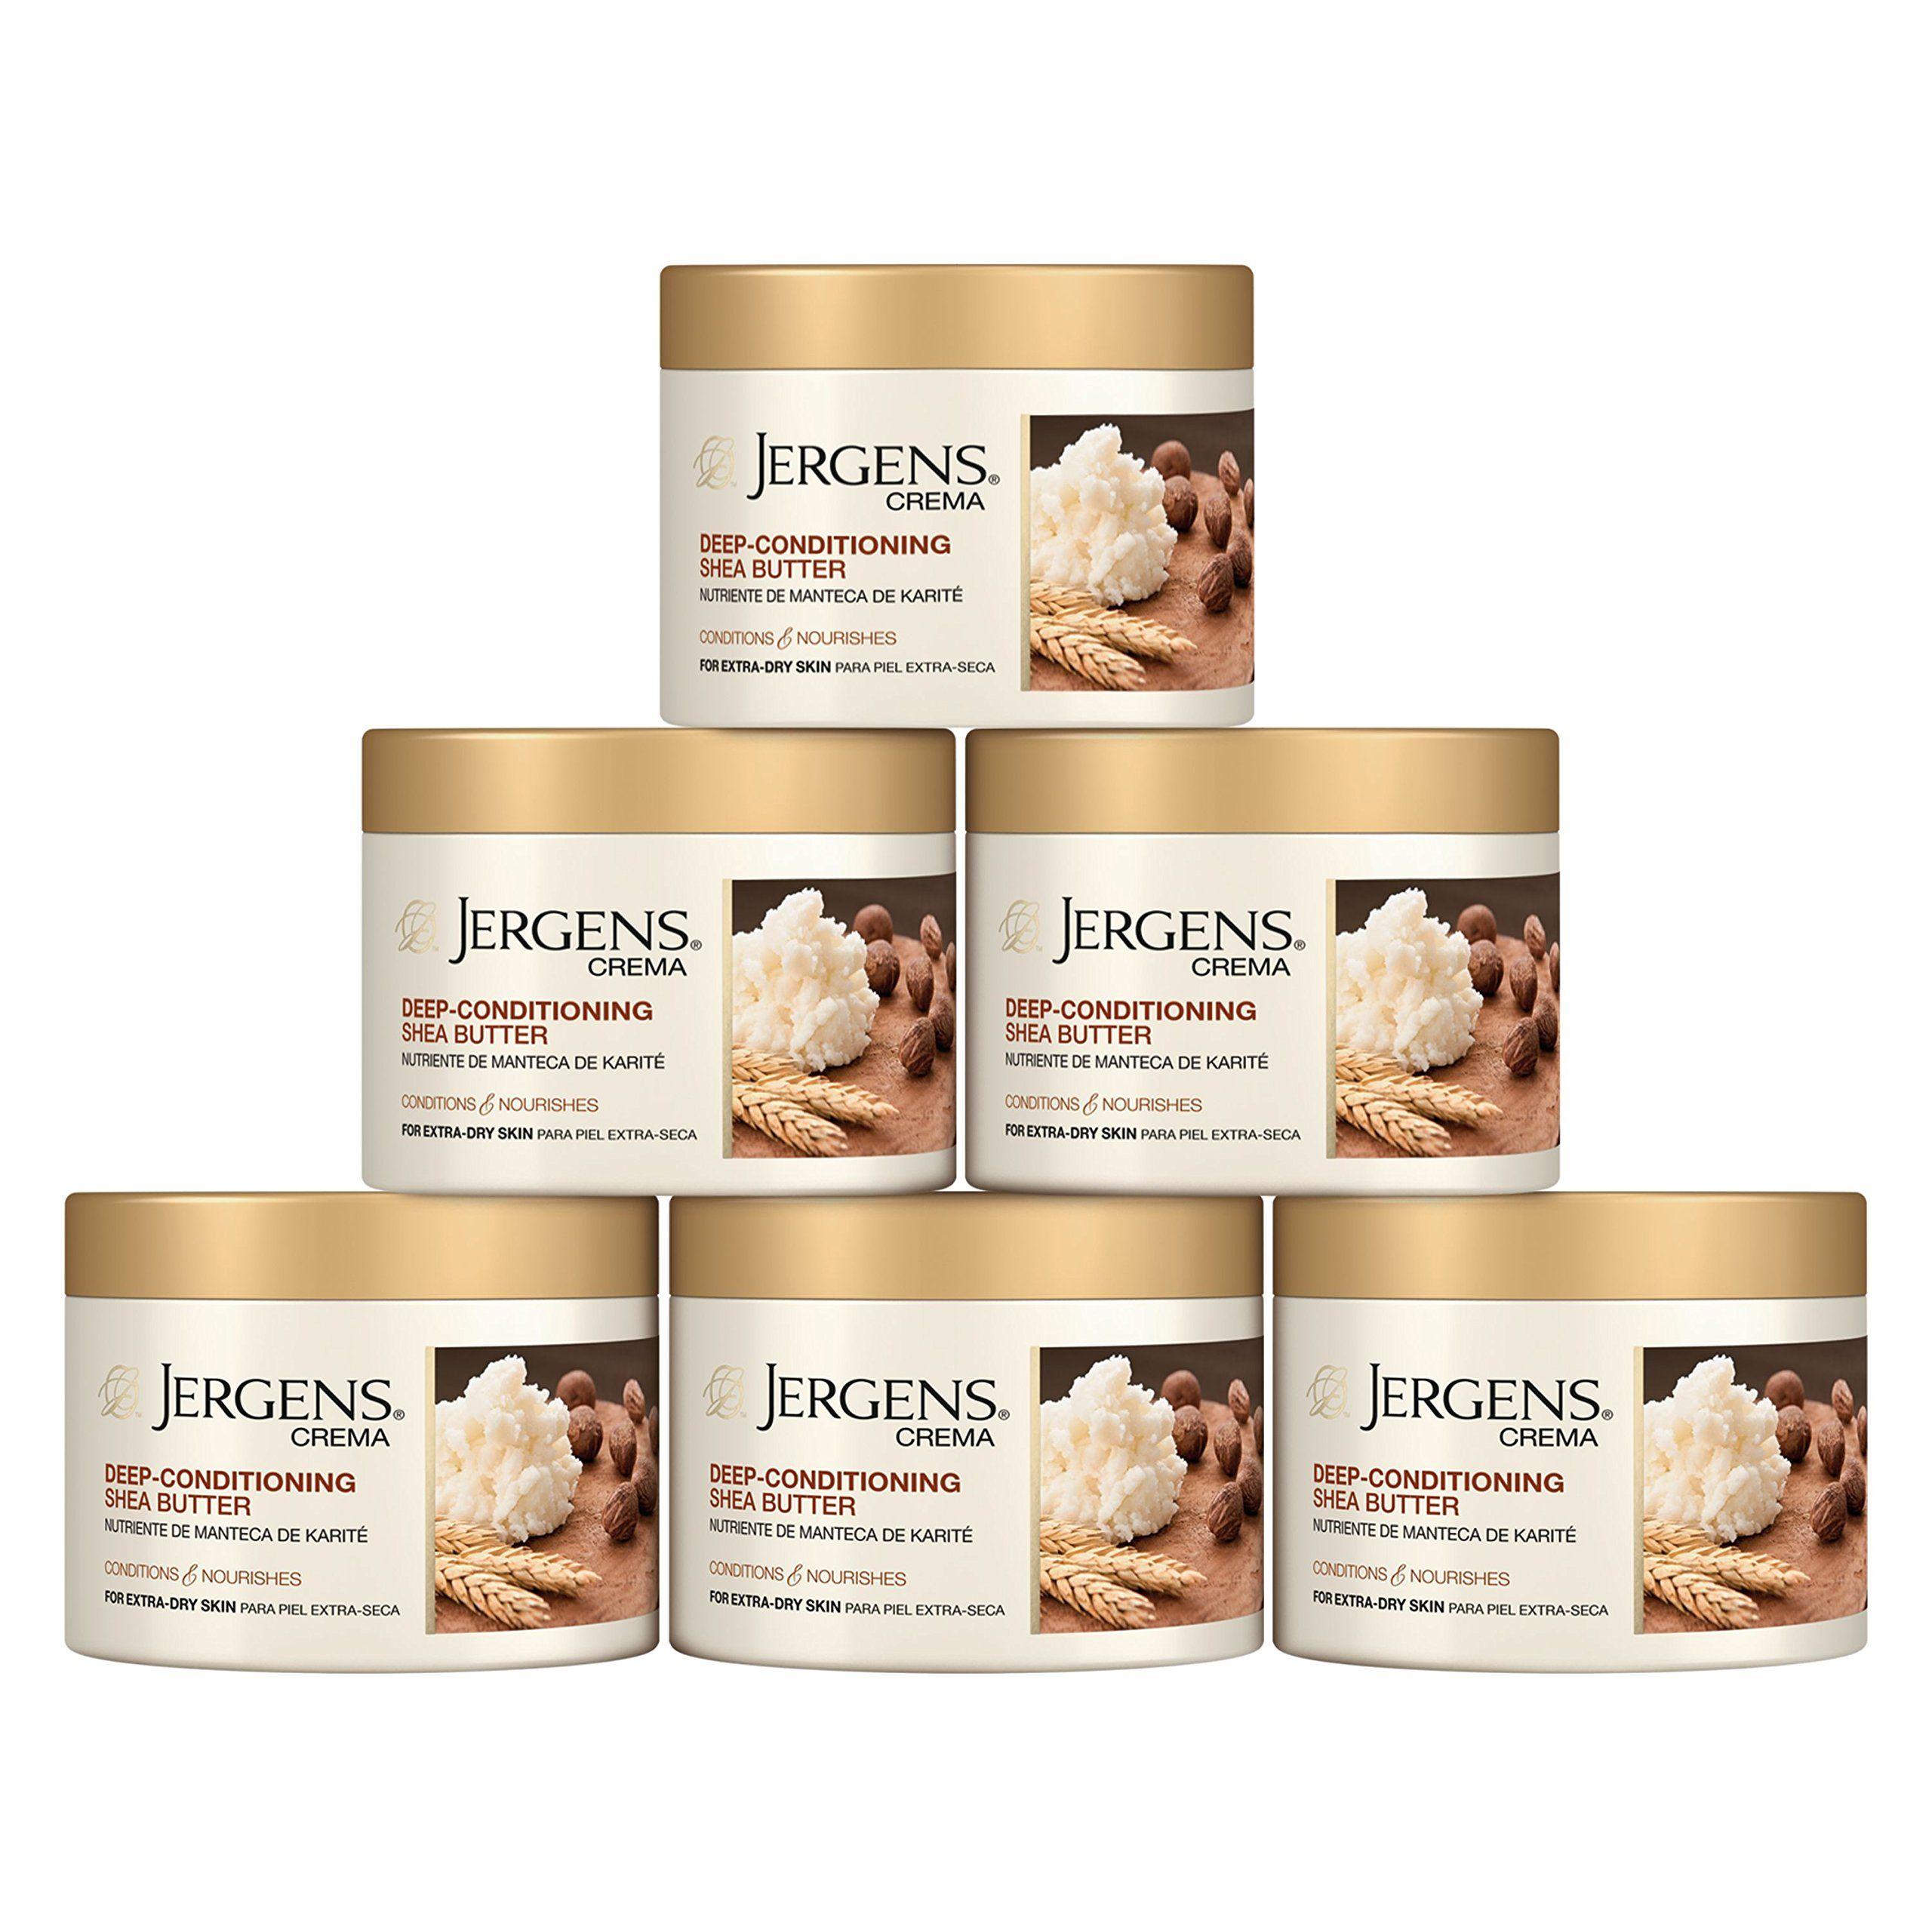 Jergens Logo - Amazon.com : Jergens Crema Deep Conditioning Shea Butter Body Cream